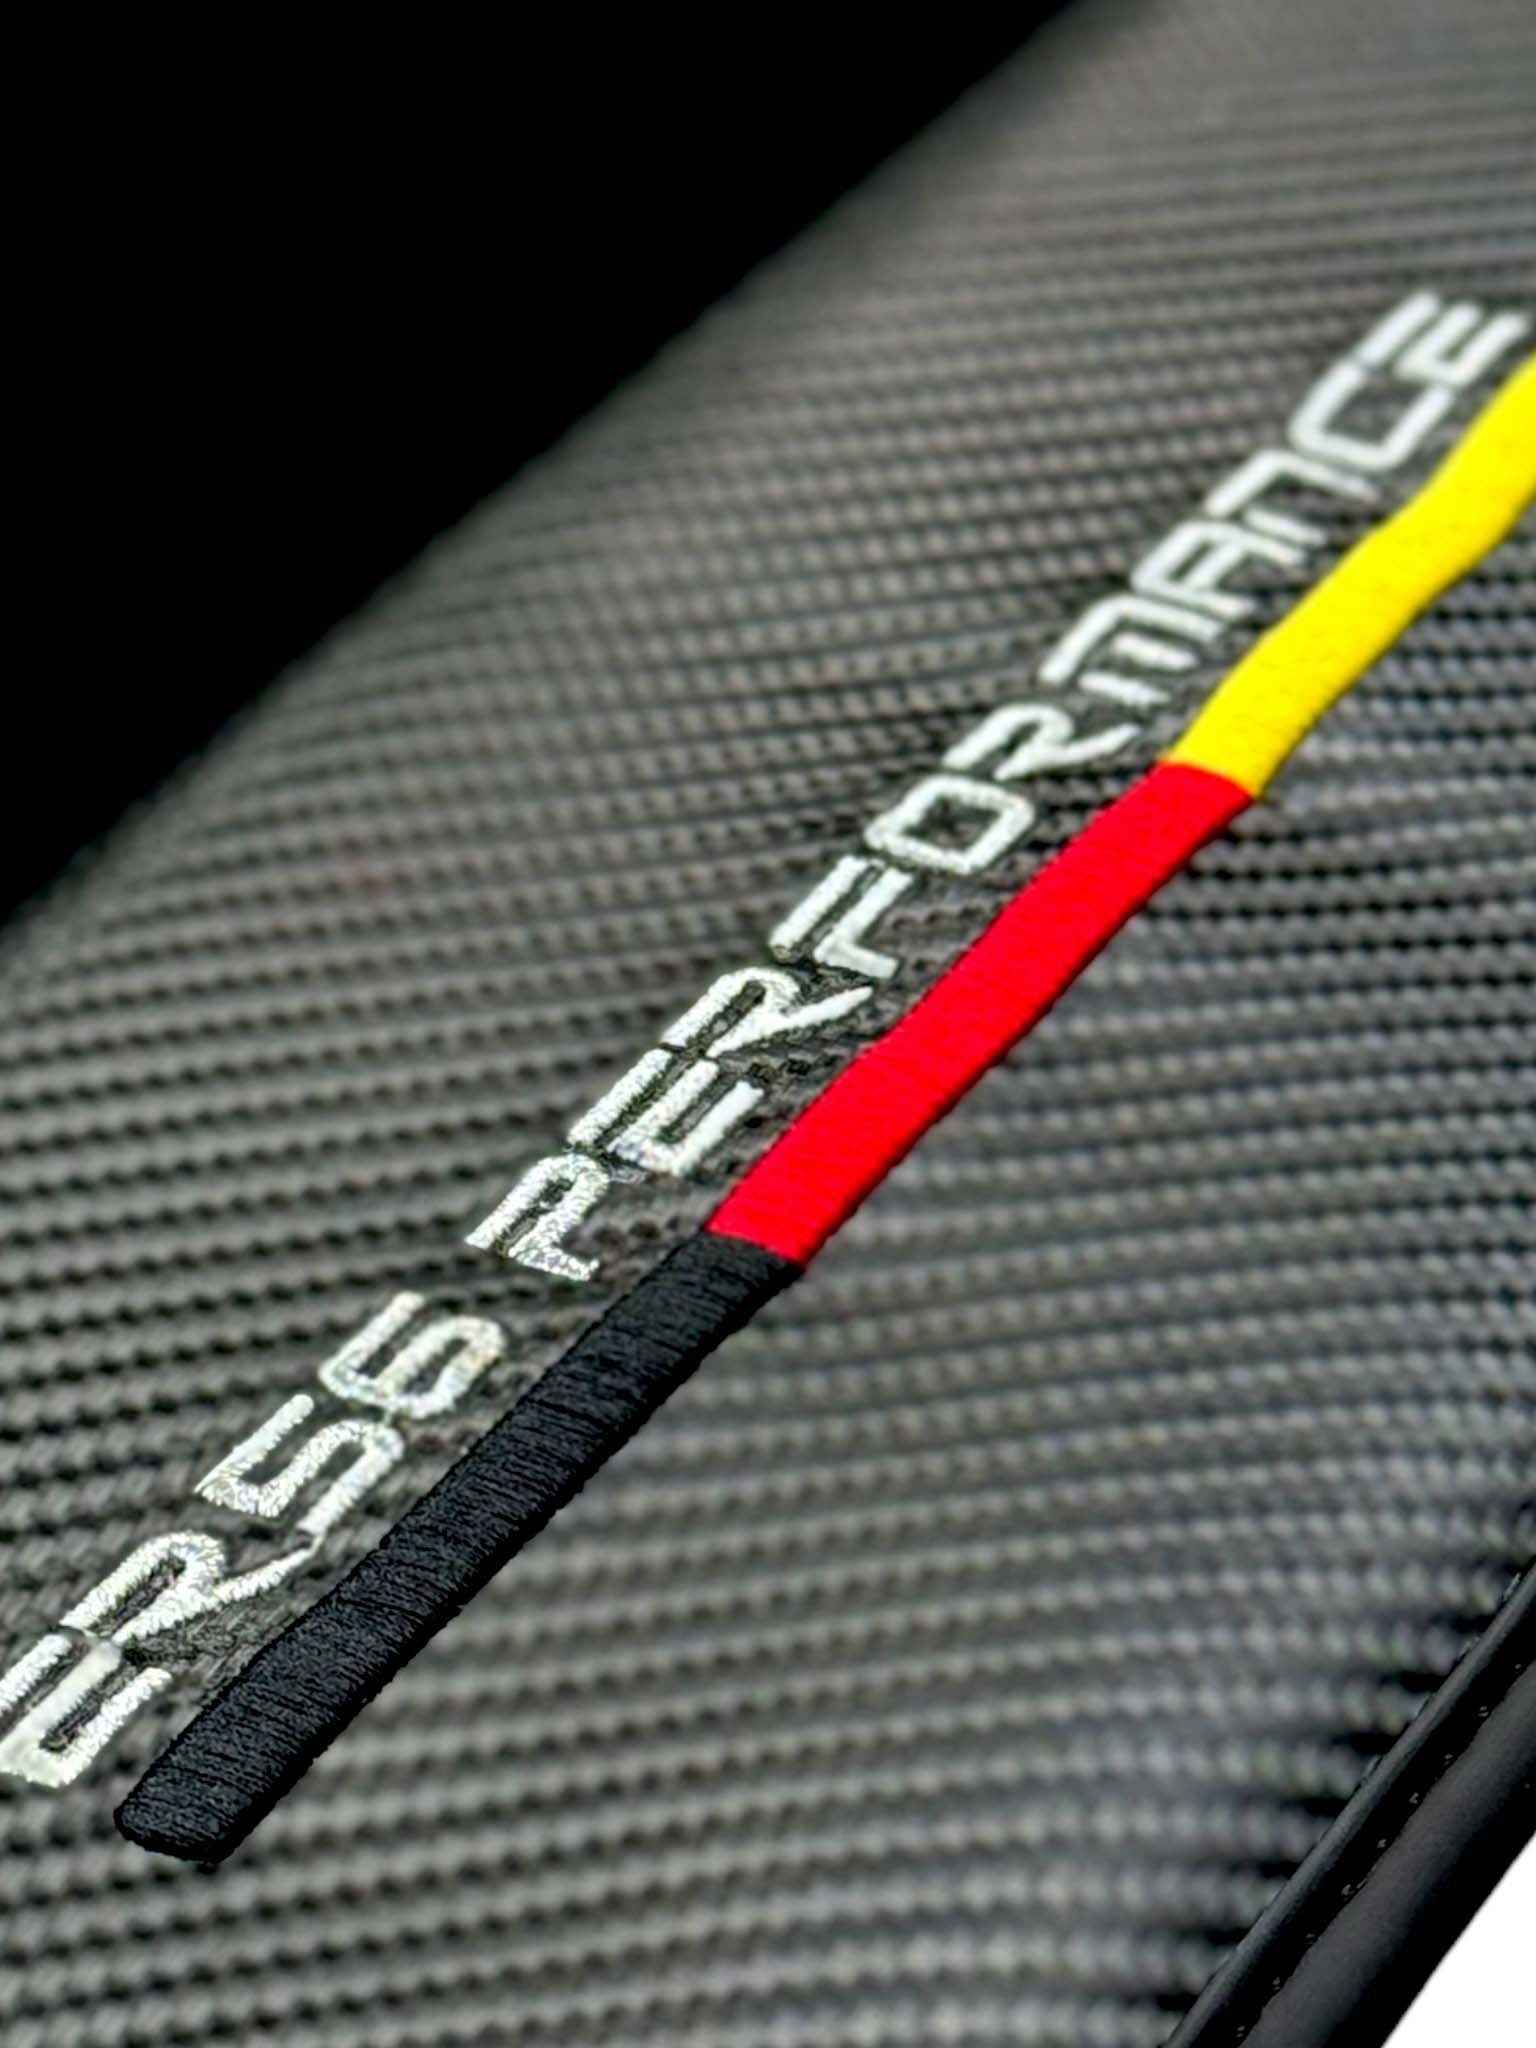 Black Floor Floor Mats For BMW 1 Series E81 | ER56 Performance | Carbon Edition